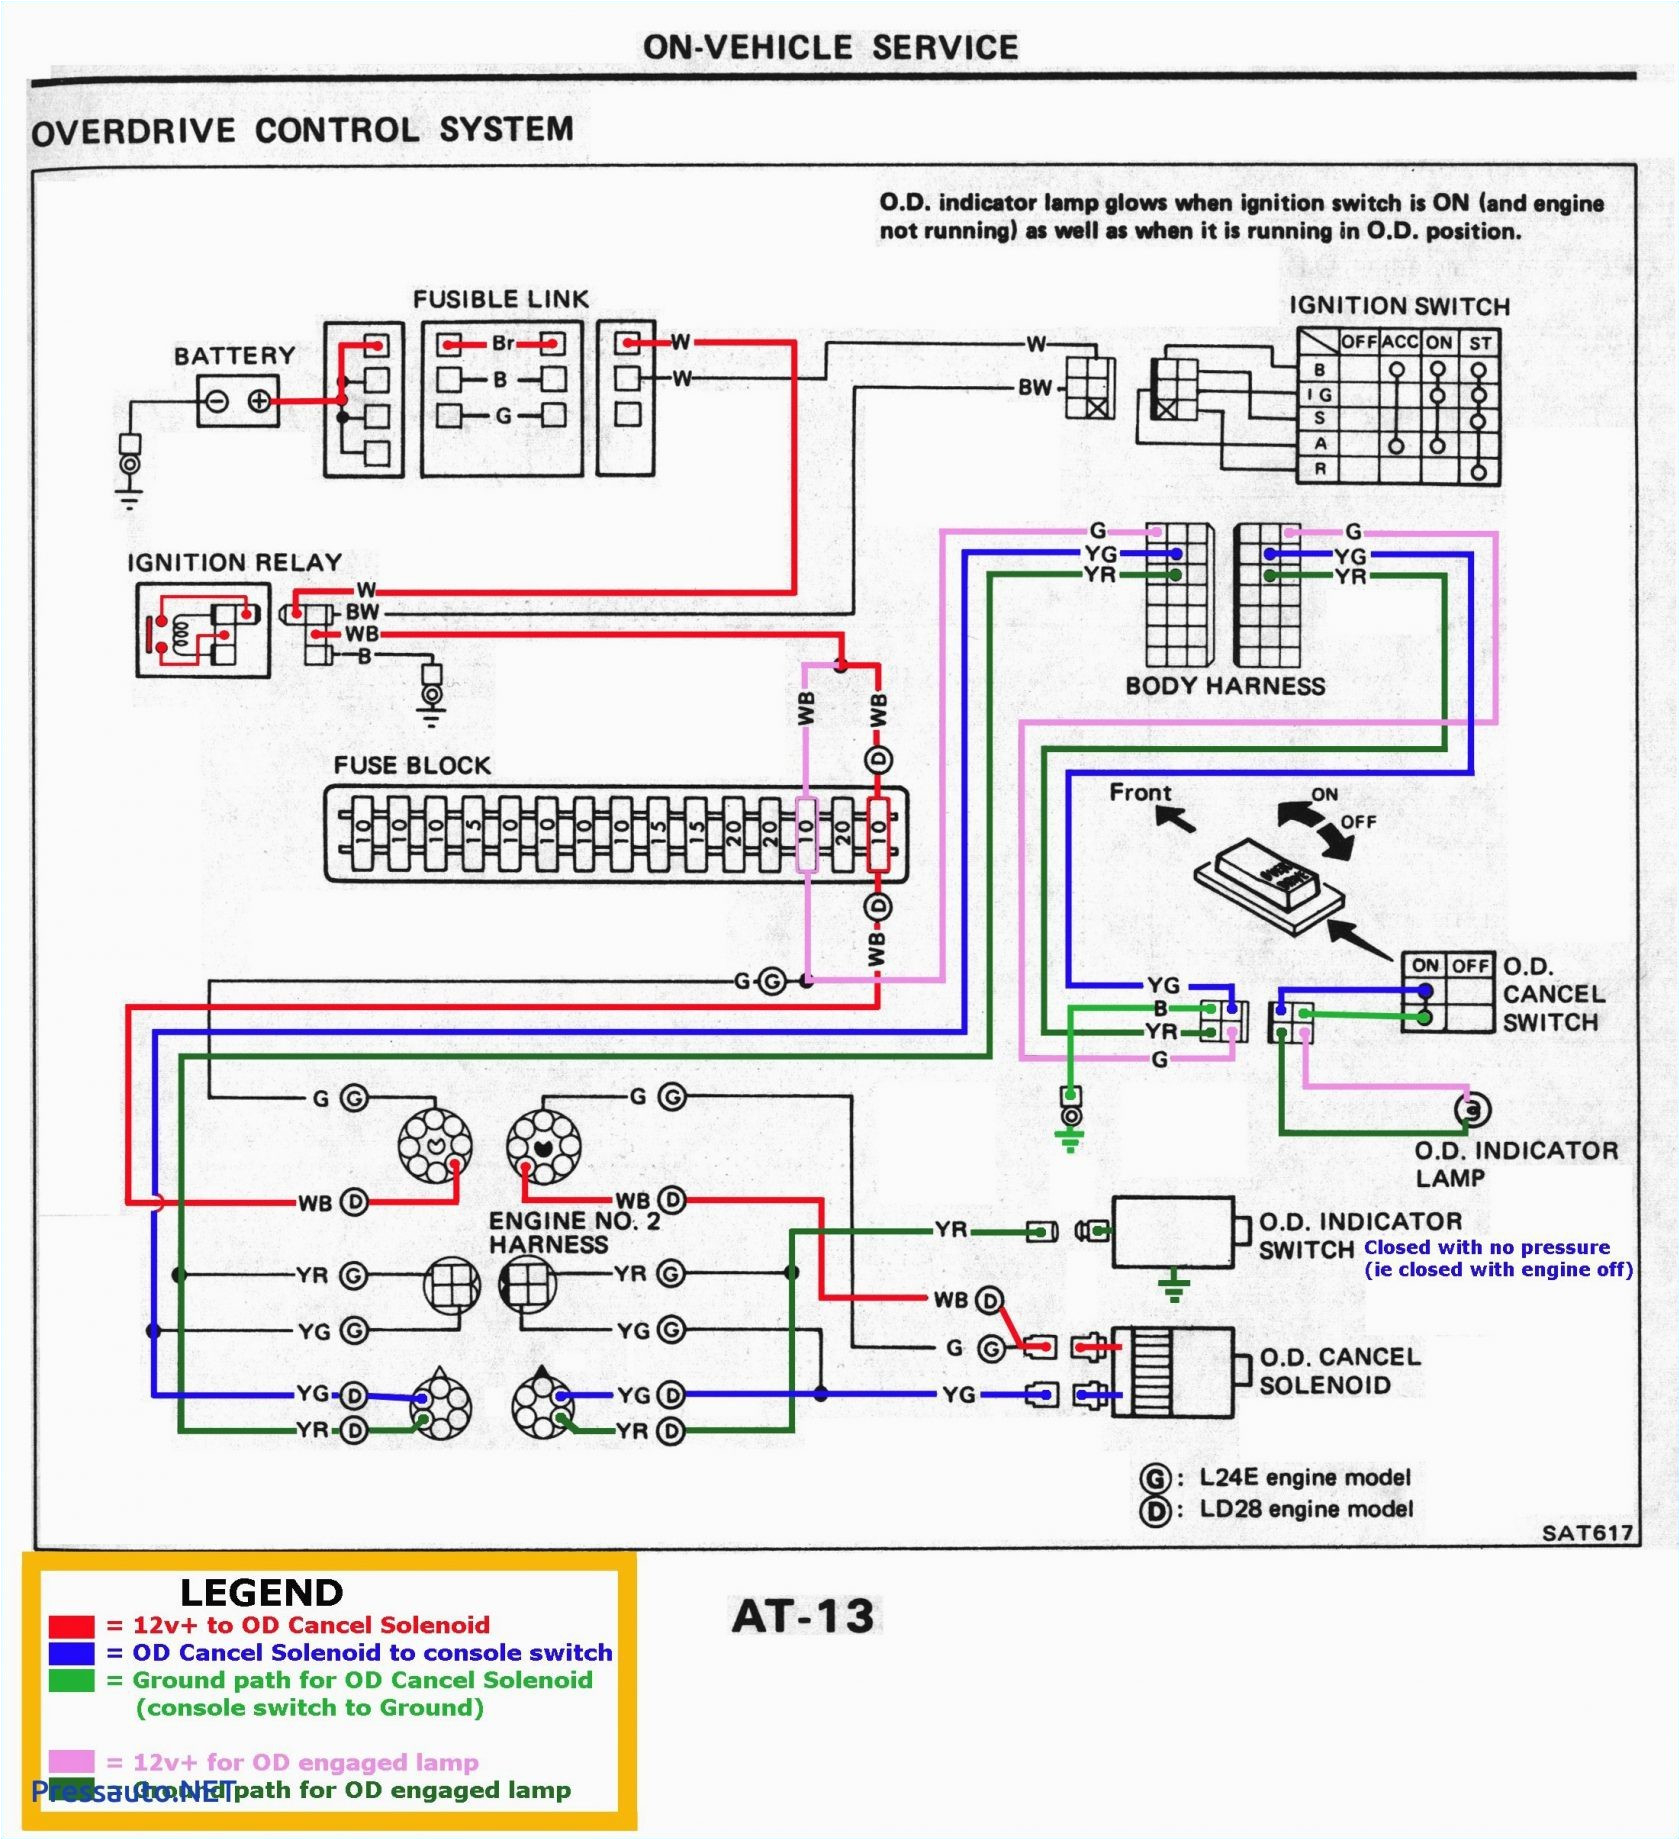 aep wiring diagram wiring diagram blog wiring meter diagram appalachian power